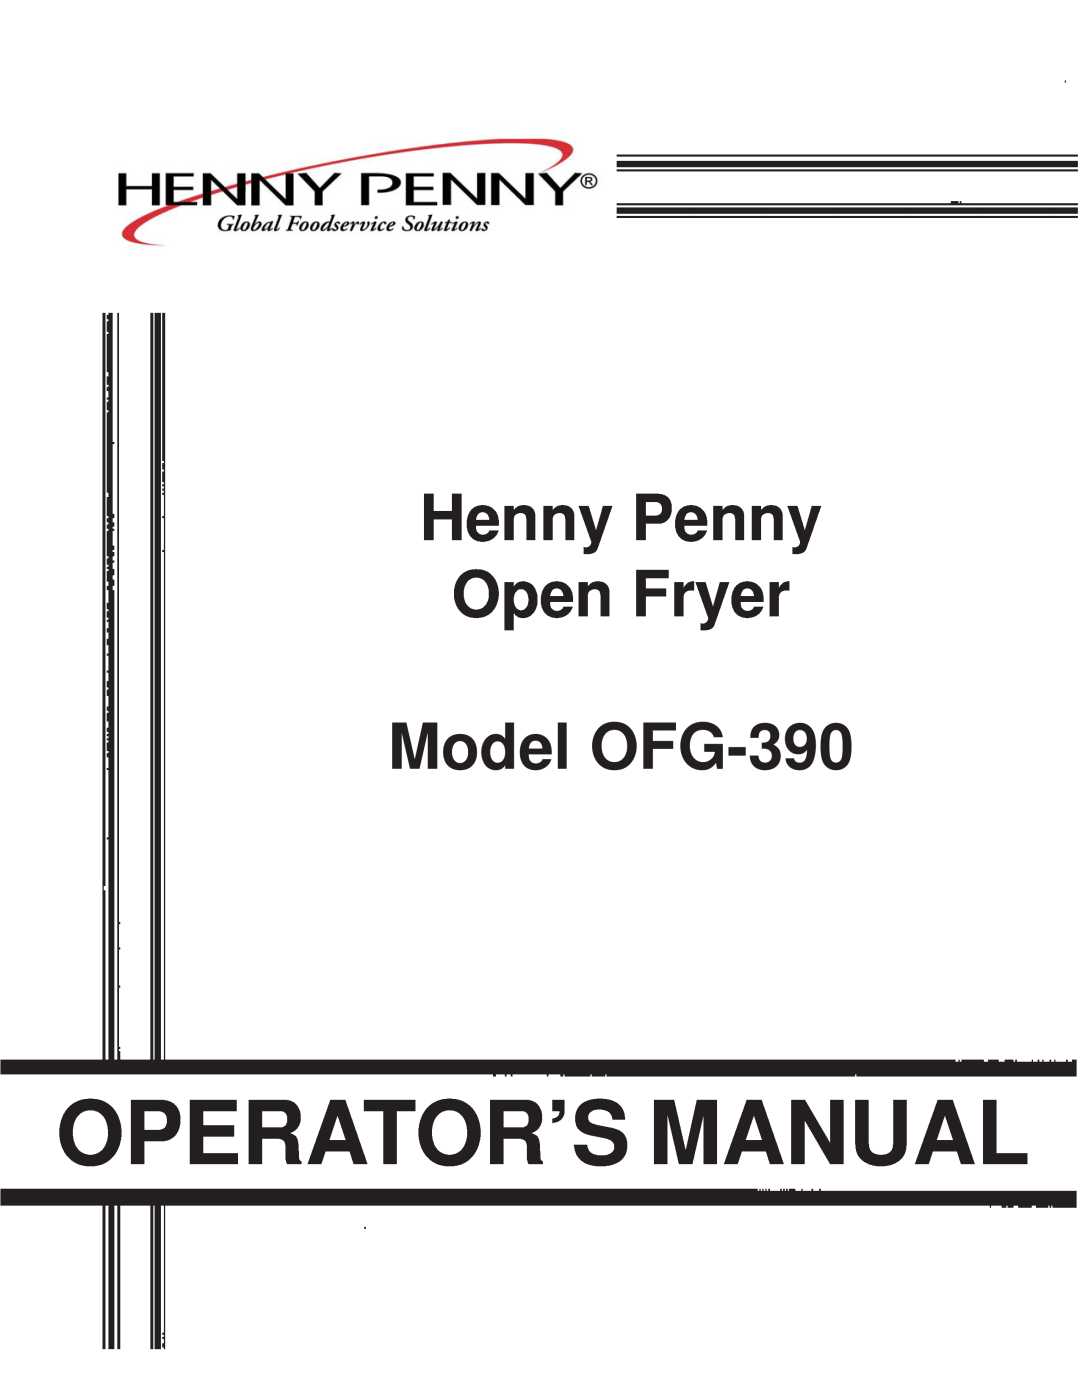 Henny Penny manual Operator’S Manual, Henny Penny Open Fryer Model OFG-390 